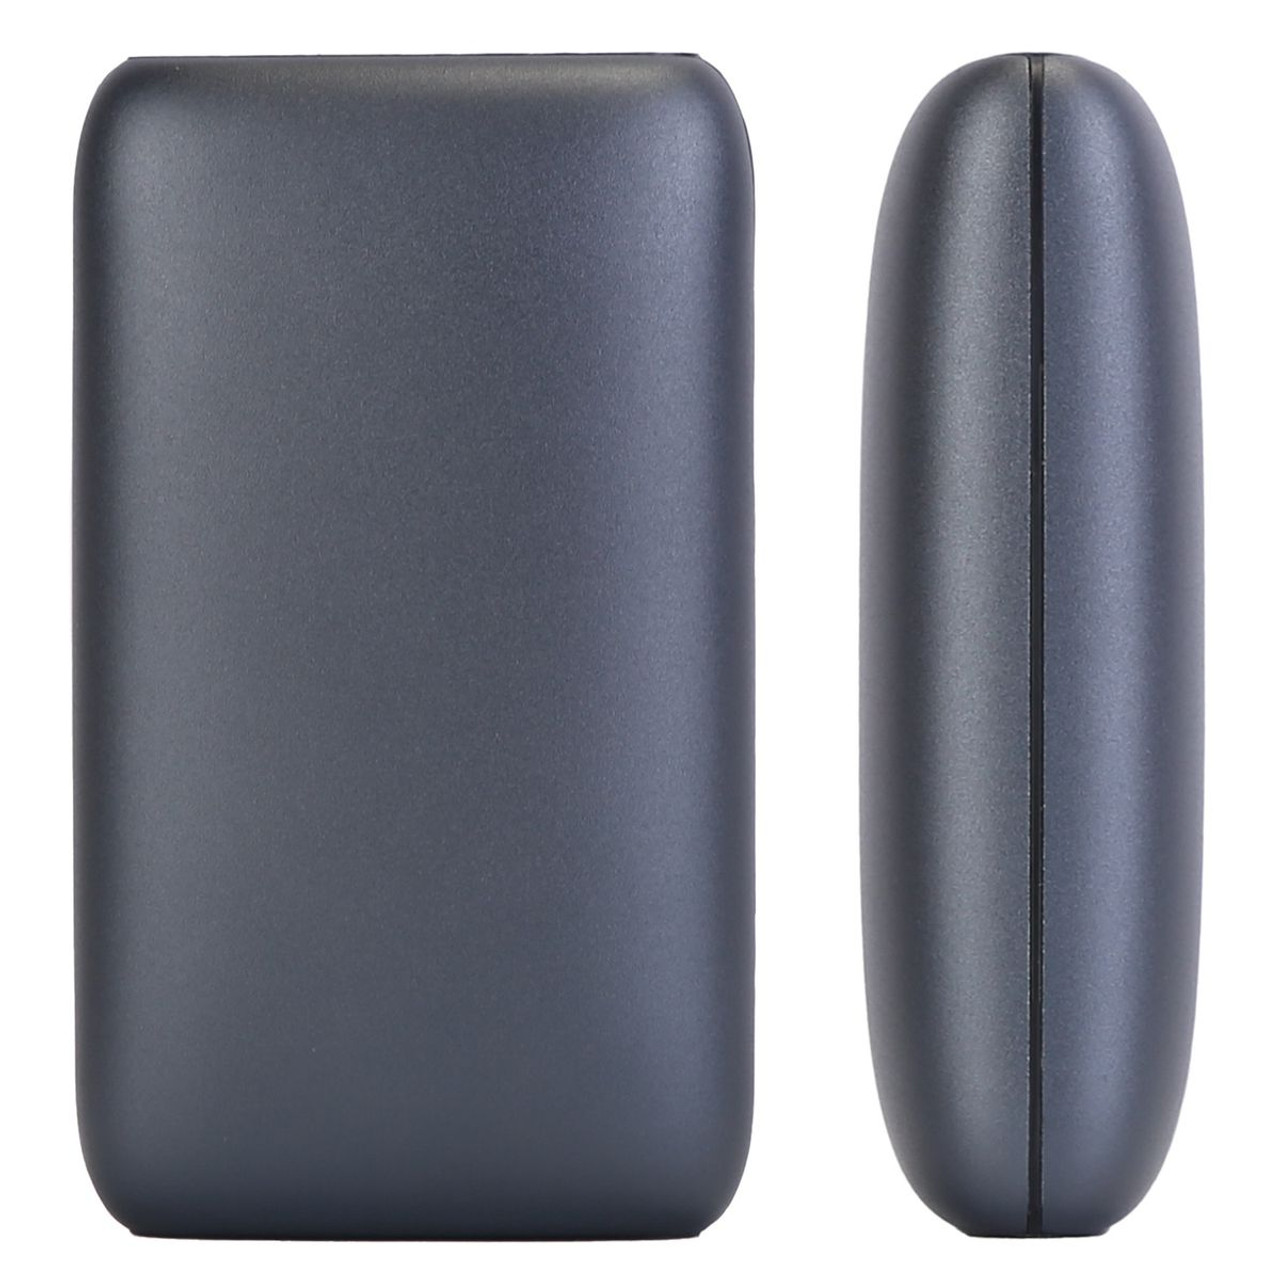 iMounTEK® Double-Sided Hand Warmer product image